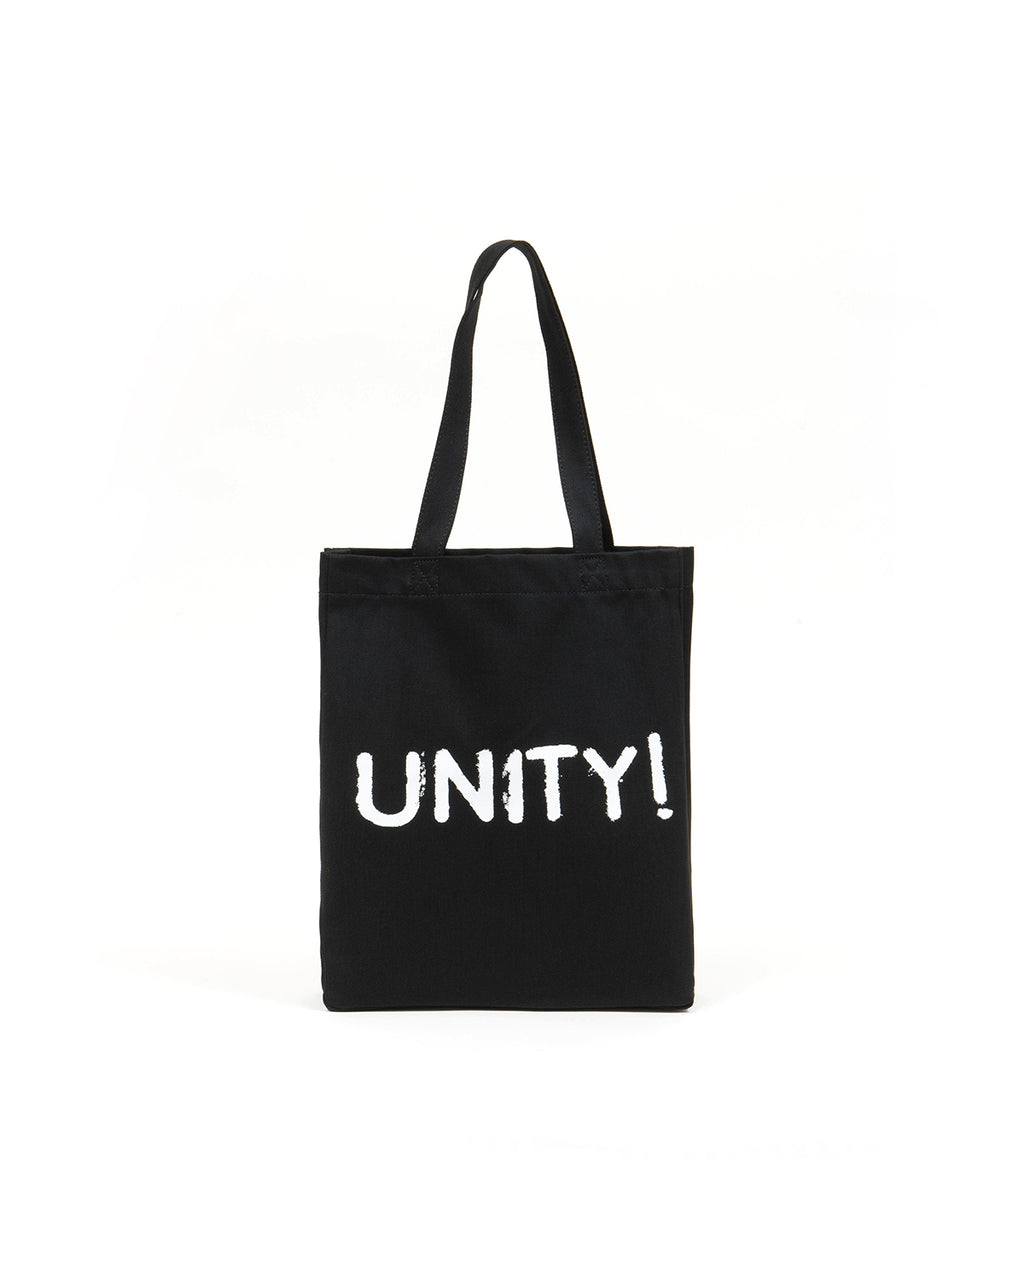 Brain Dead x A.P.C. Unity Tote Bag - Black 2